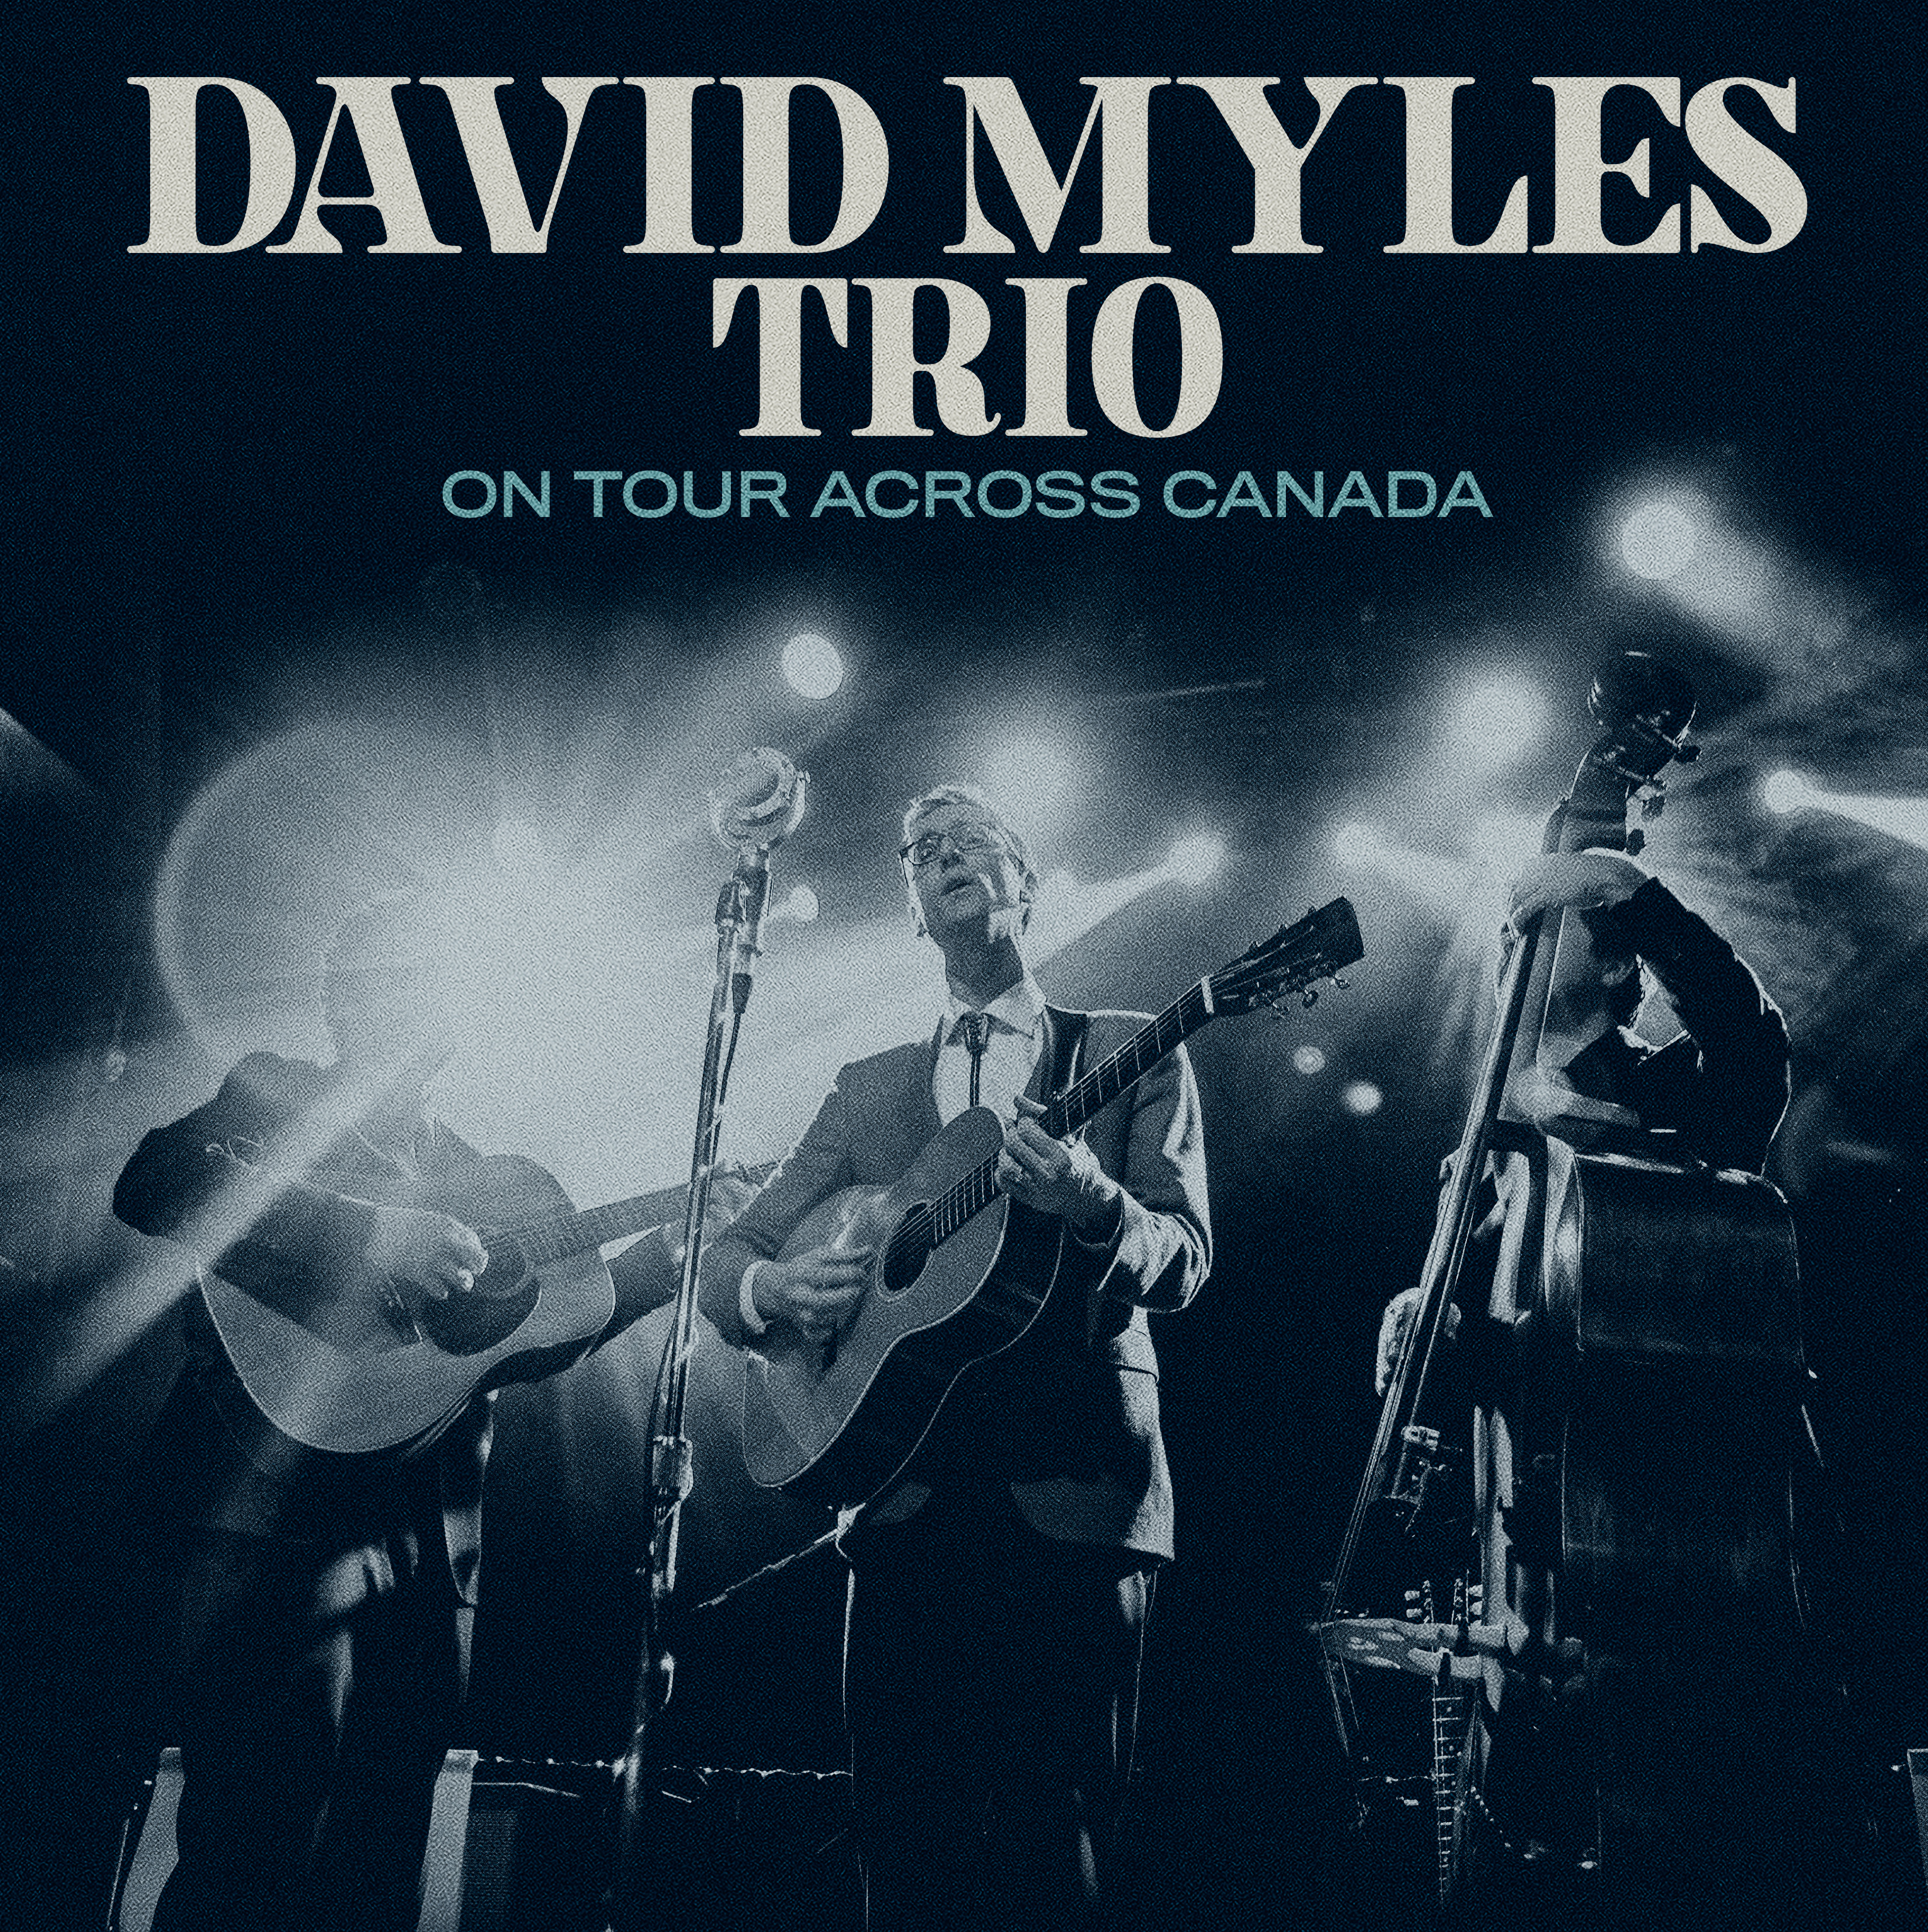 David Myles Trio On Tour Across Canada presented by the Artesian